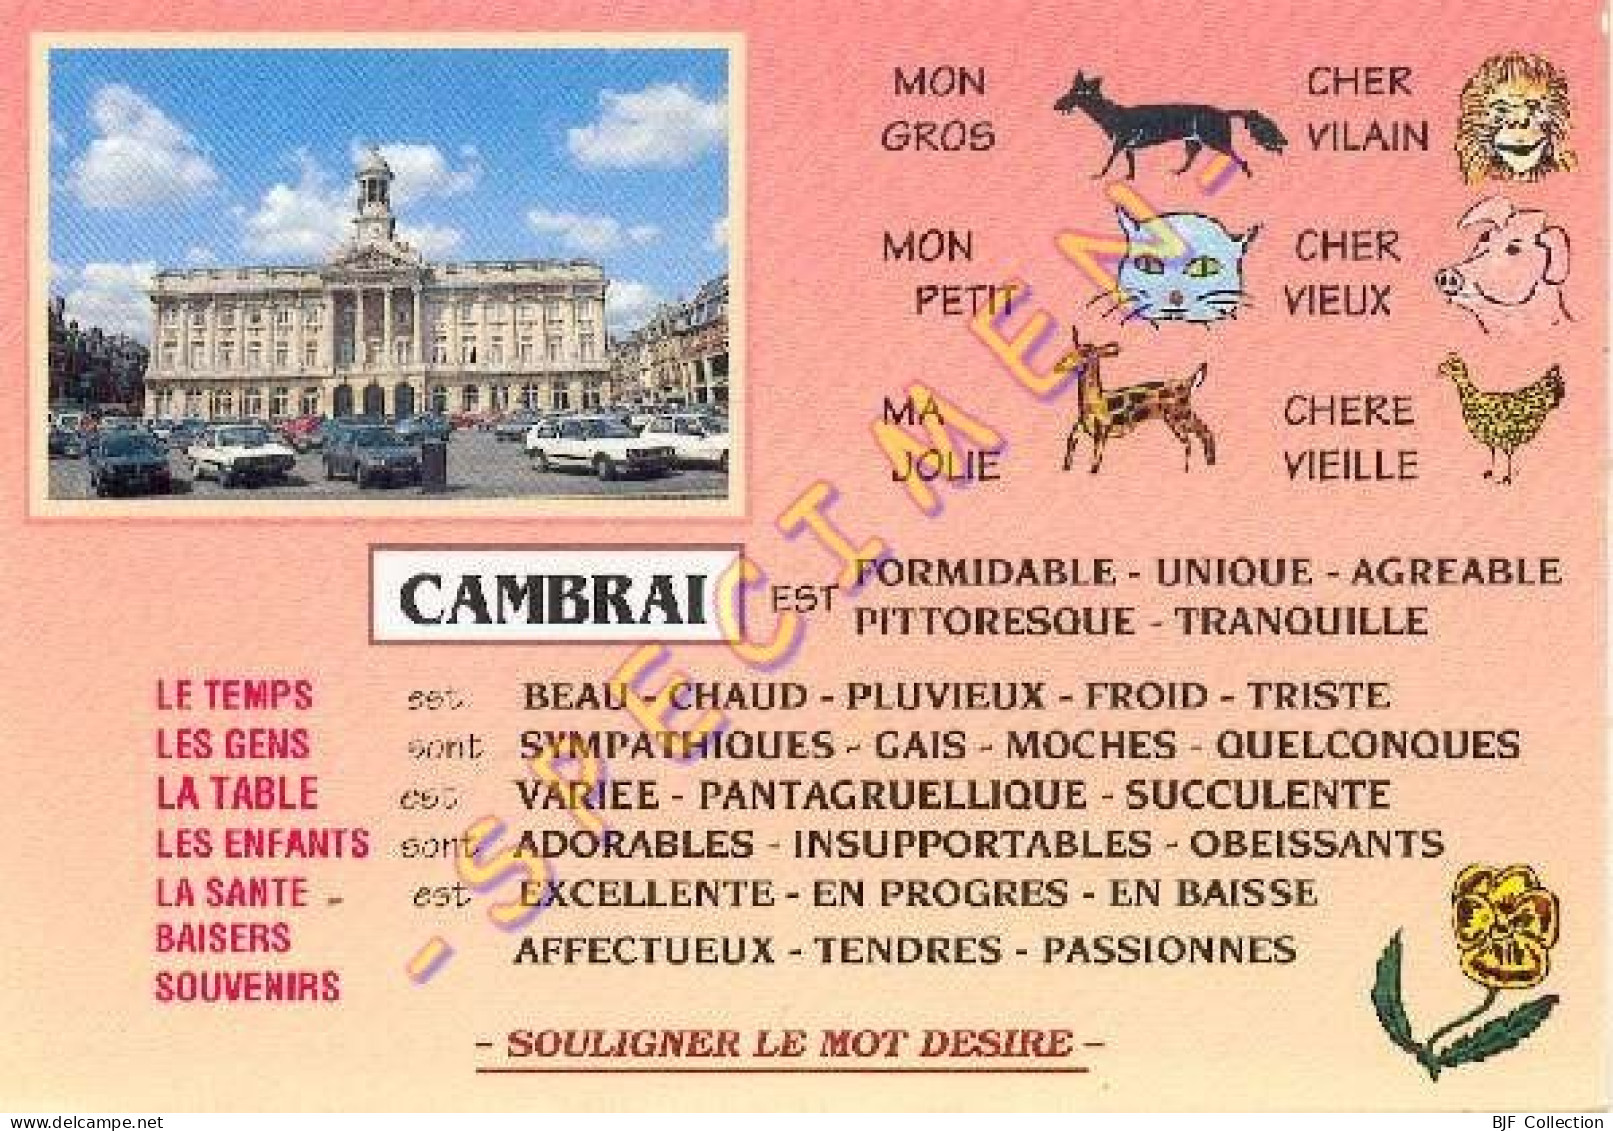 59. CAMBRAI – L'Hôtel De Ville (Message Humoristique) - Cambrai